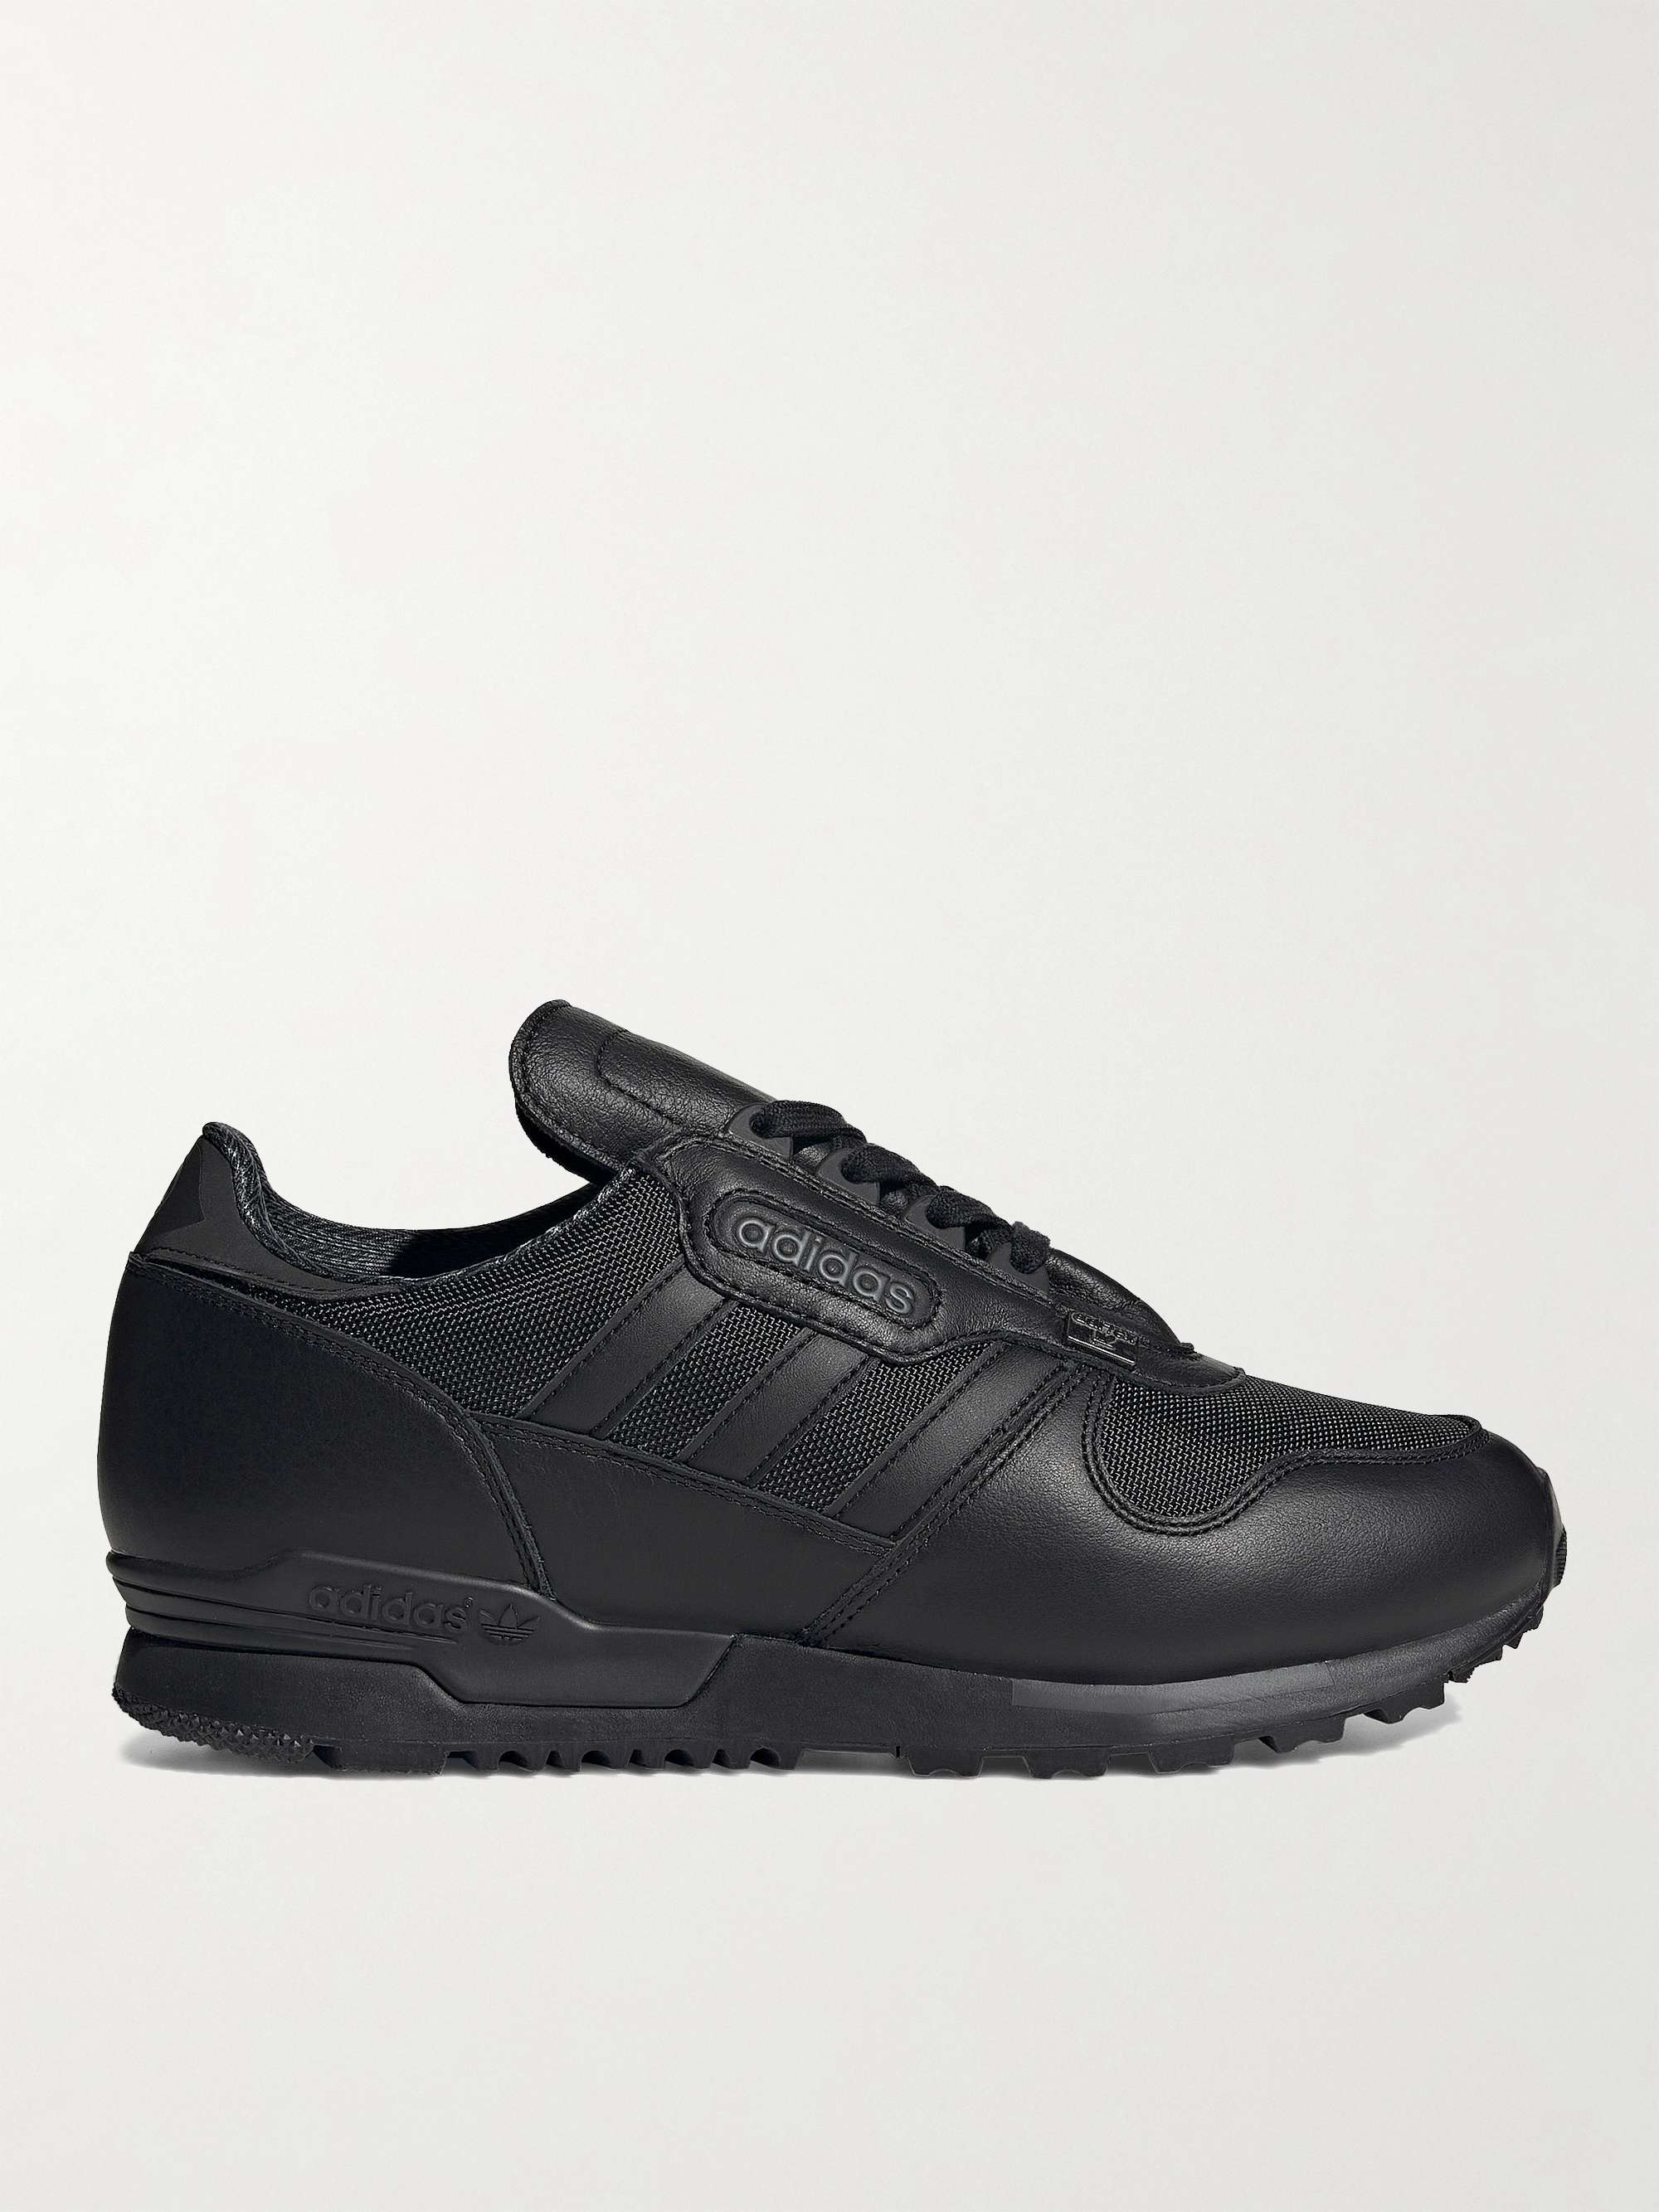 Black Hartness SPZL Leather and Mesh Sneakers | ADIDAS CONSORTIUM | MR  PORTER